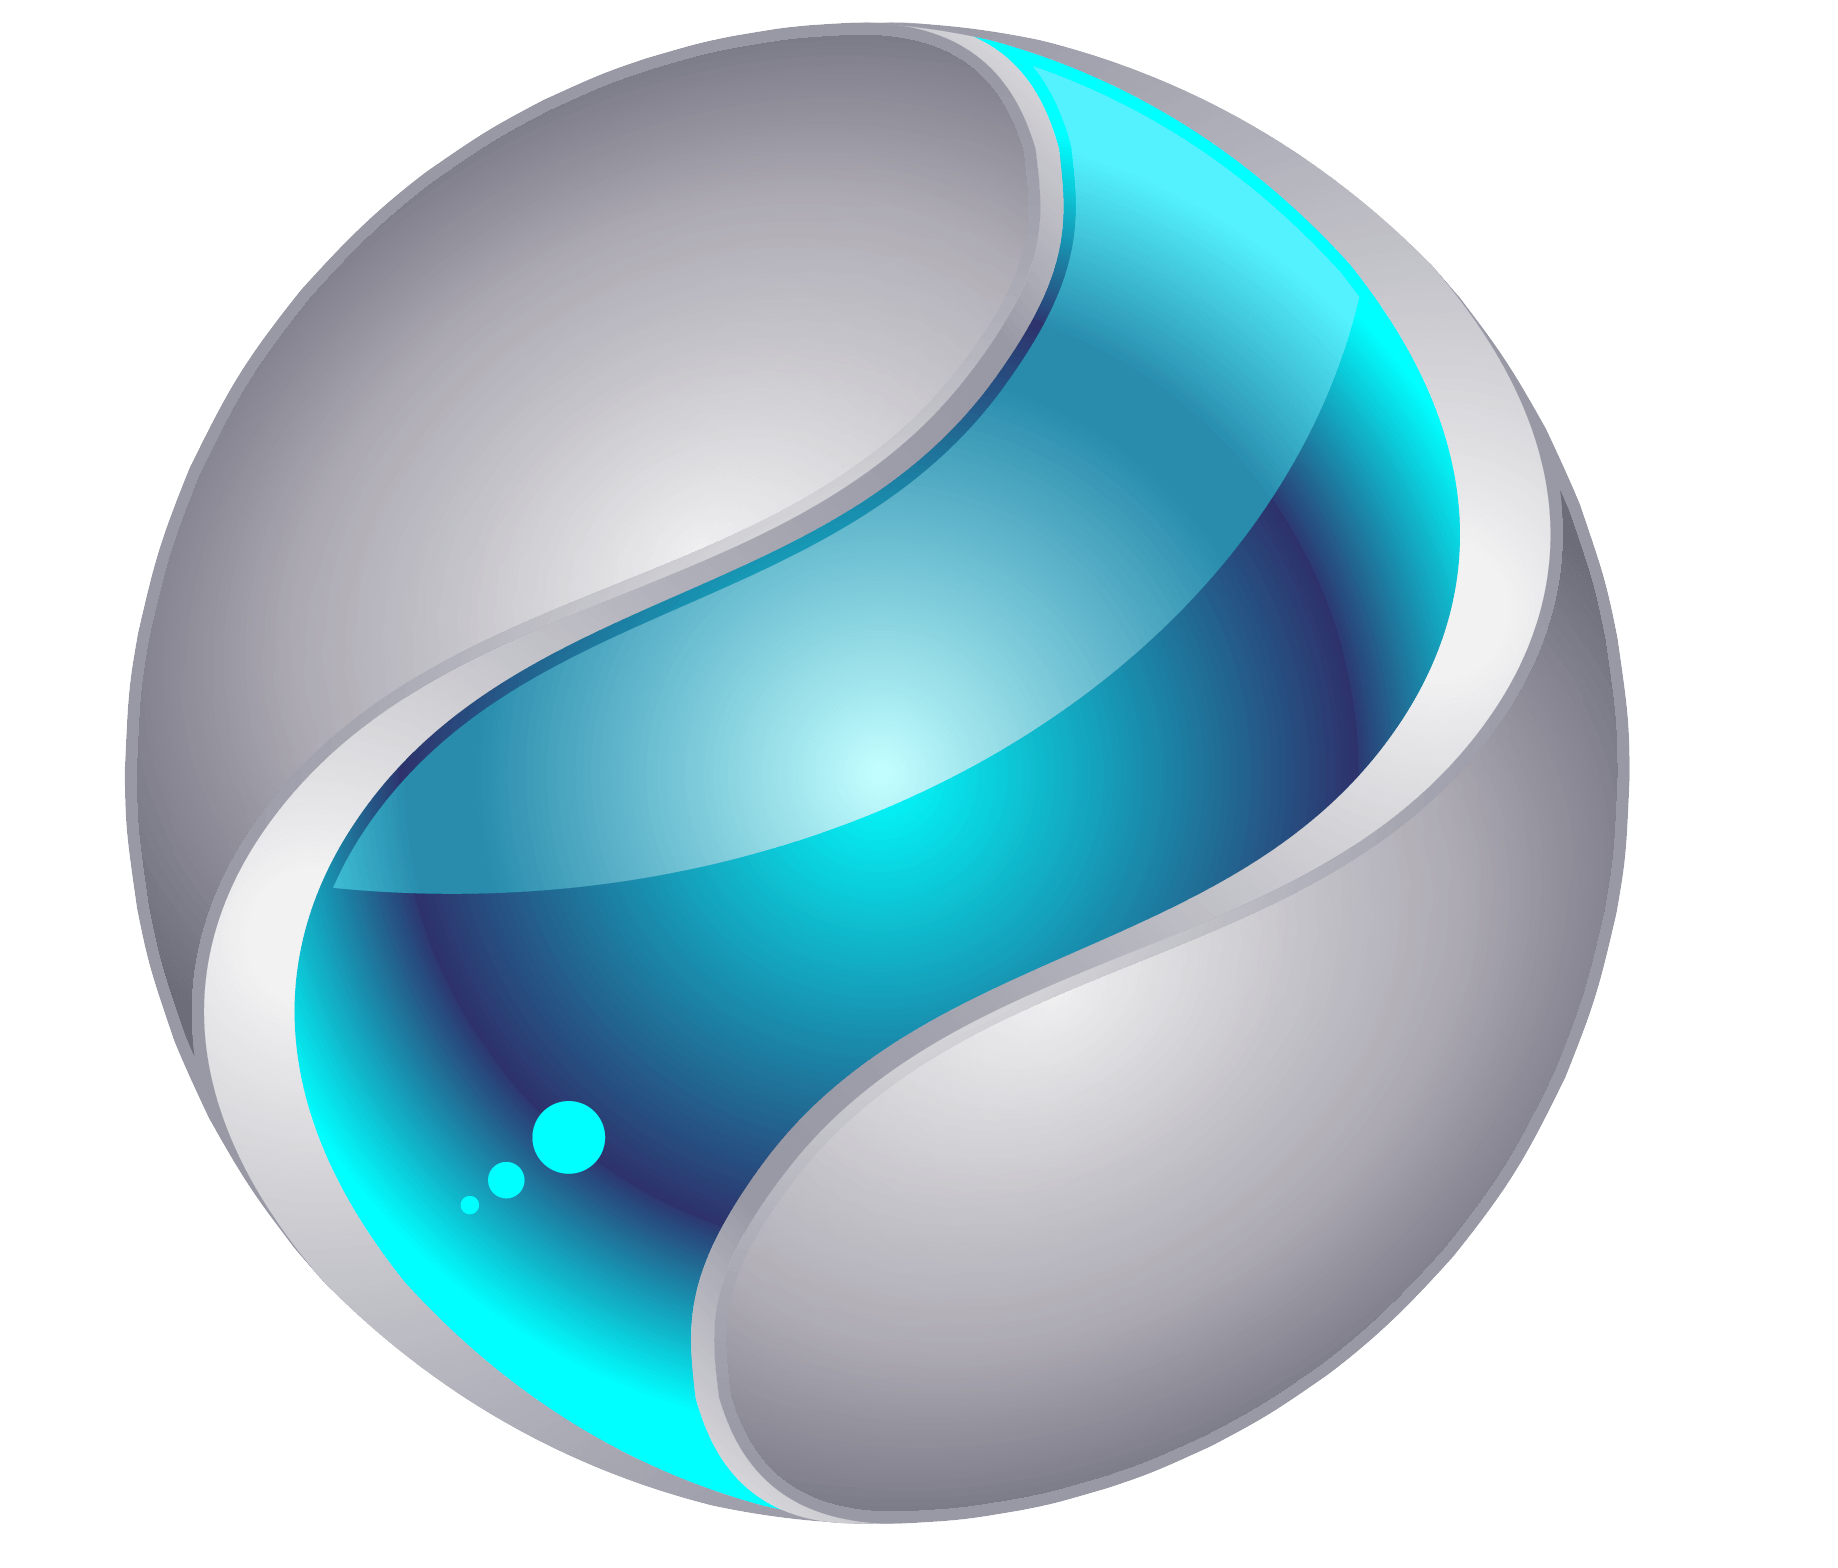 Turquoise Globe Logo - Small World | SWI logo globe - Small World